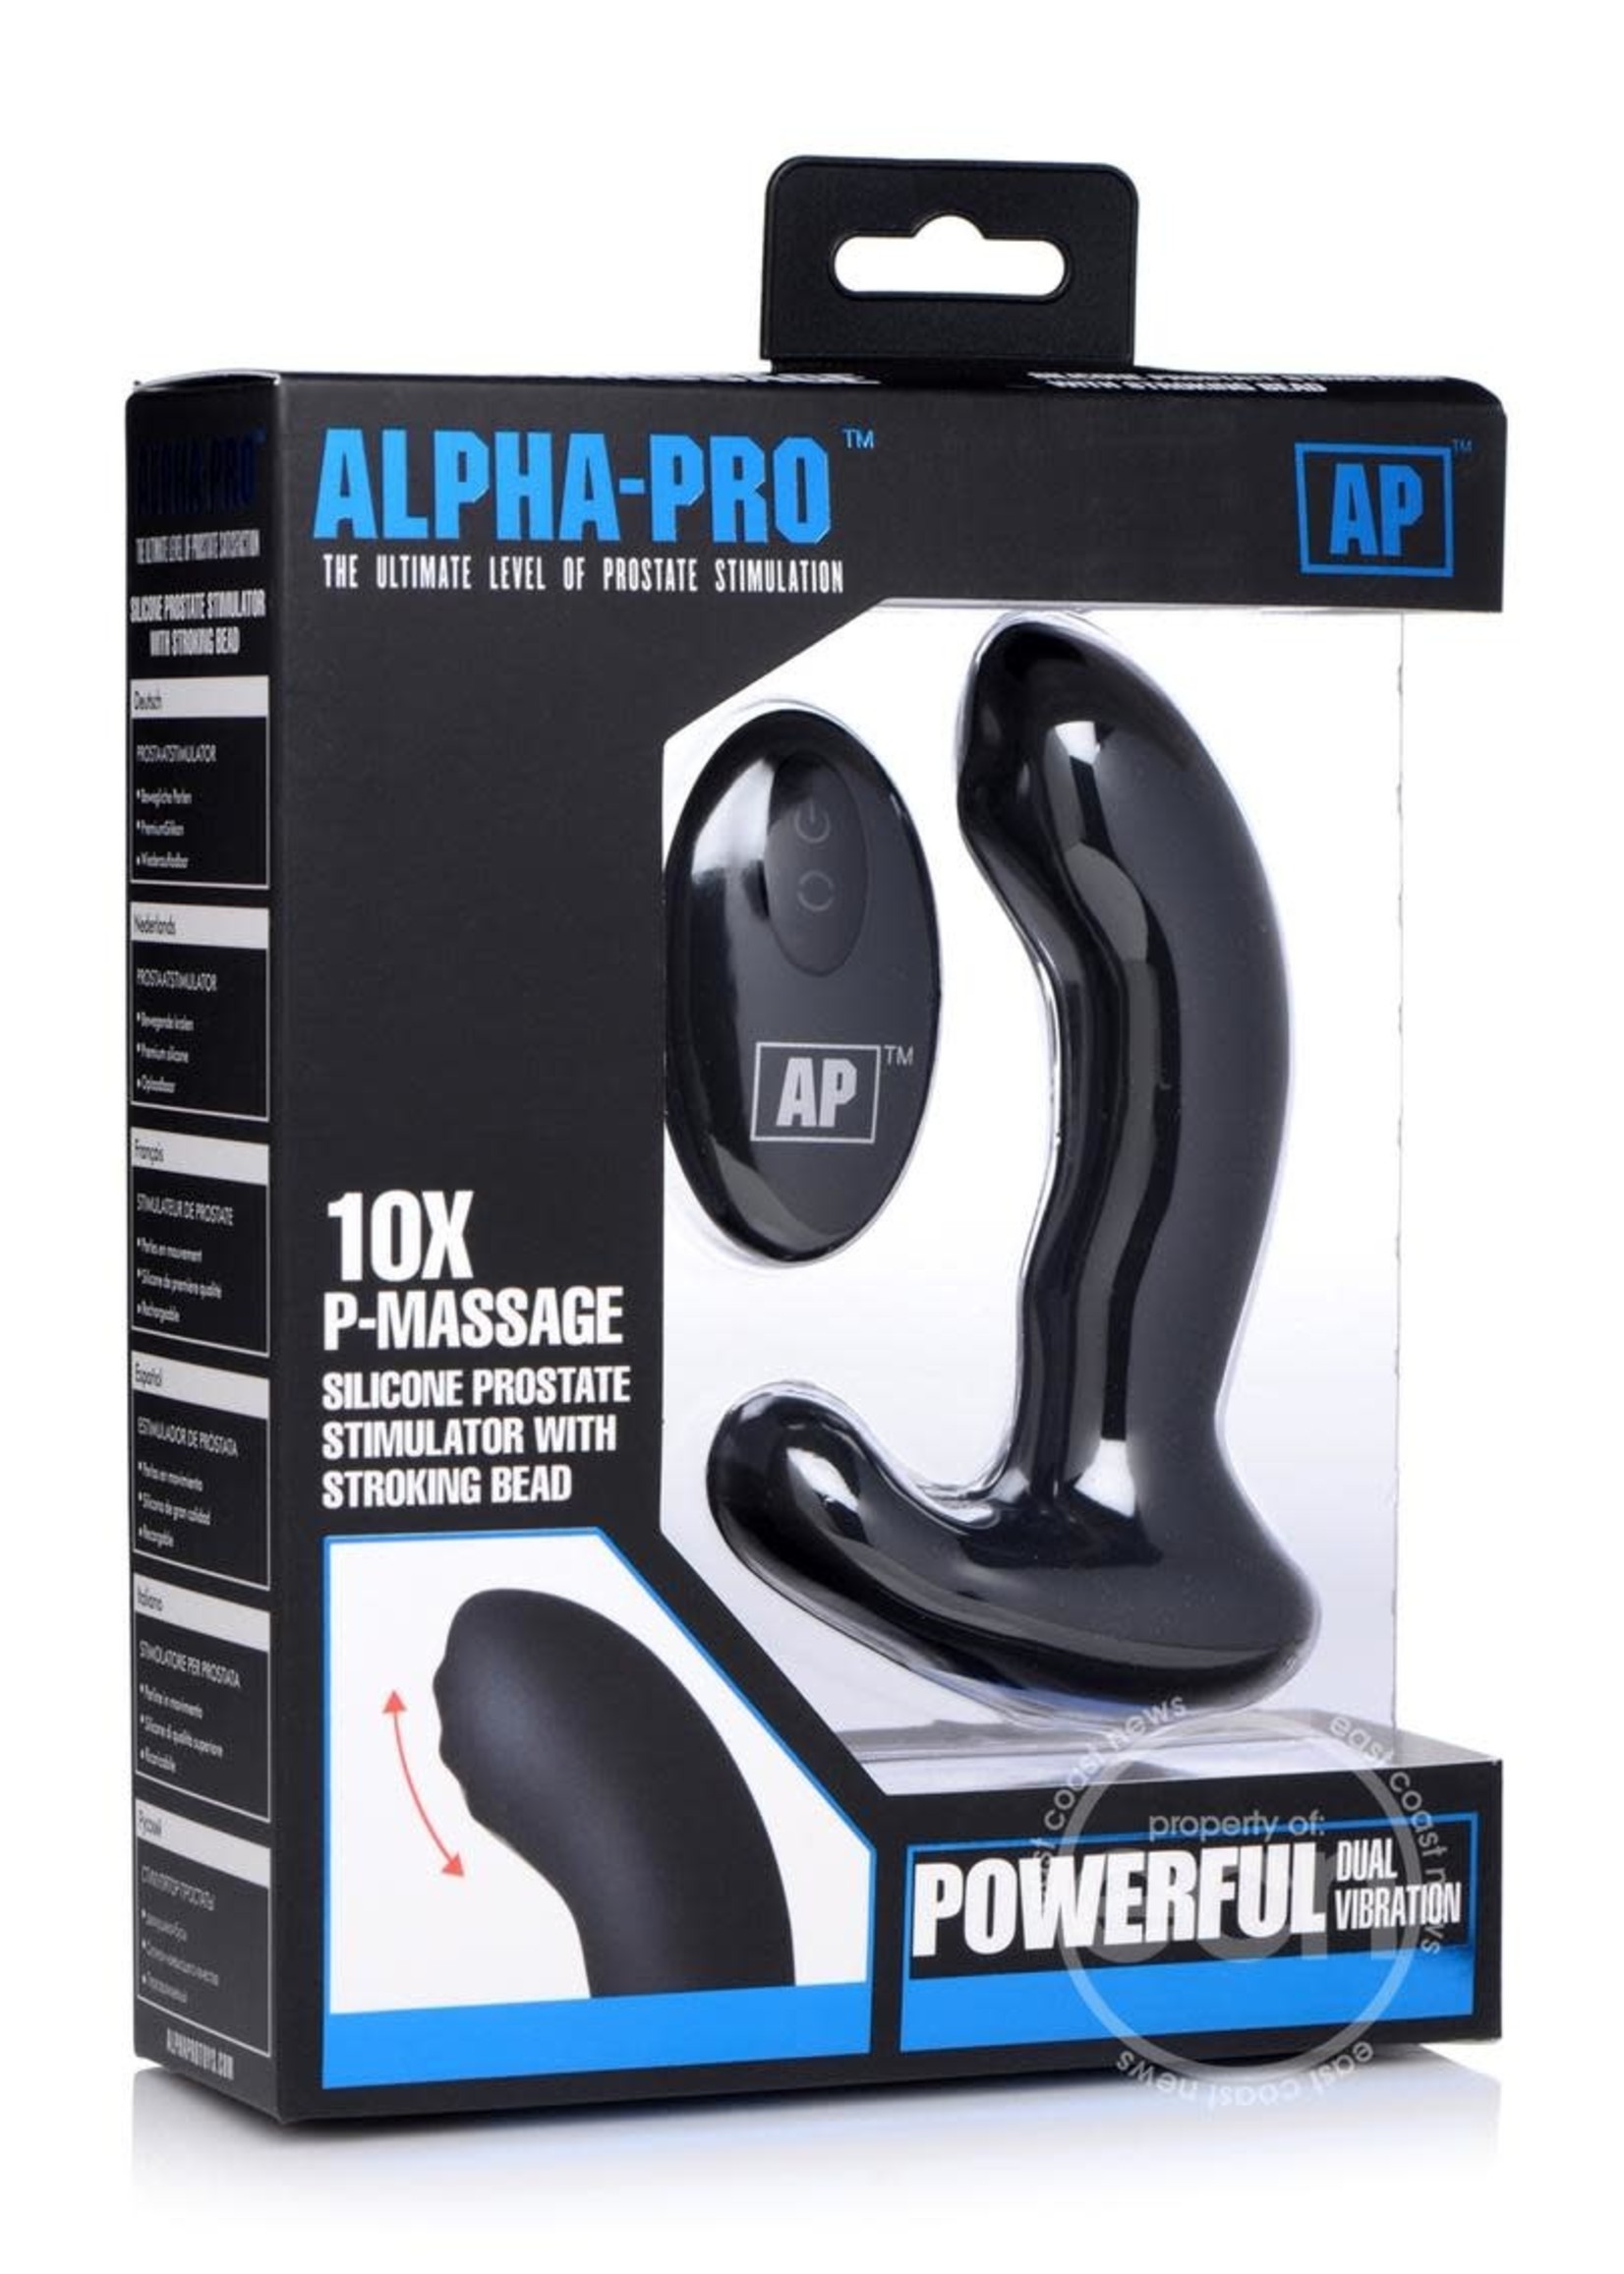 Alpha-Pro Alpha-Pro P-MASSAGE Prostate Stimulator with Stroking Bead